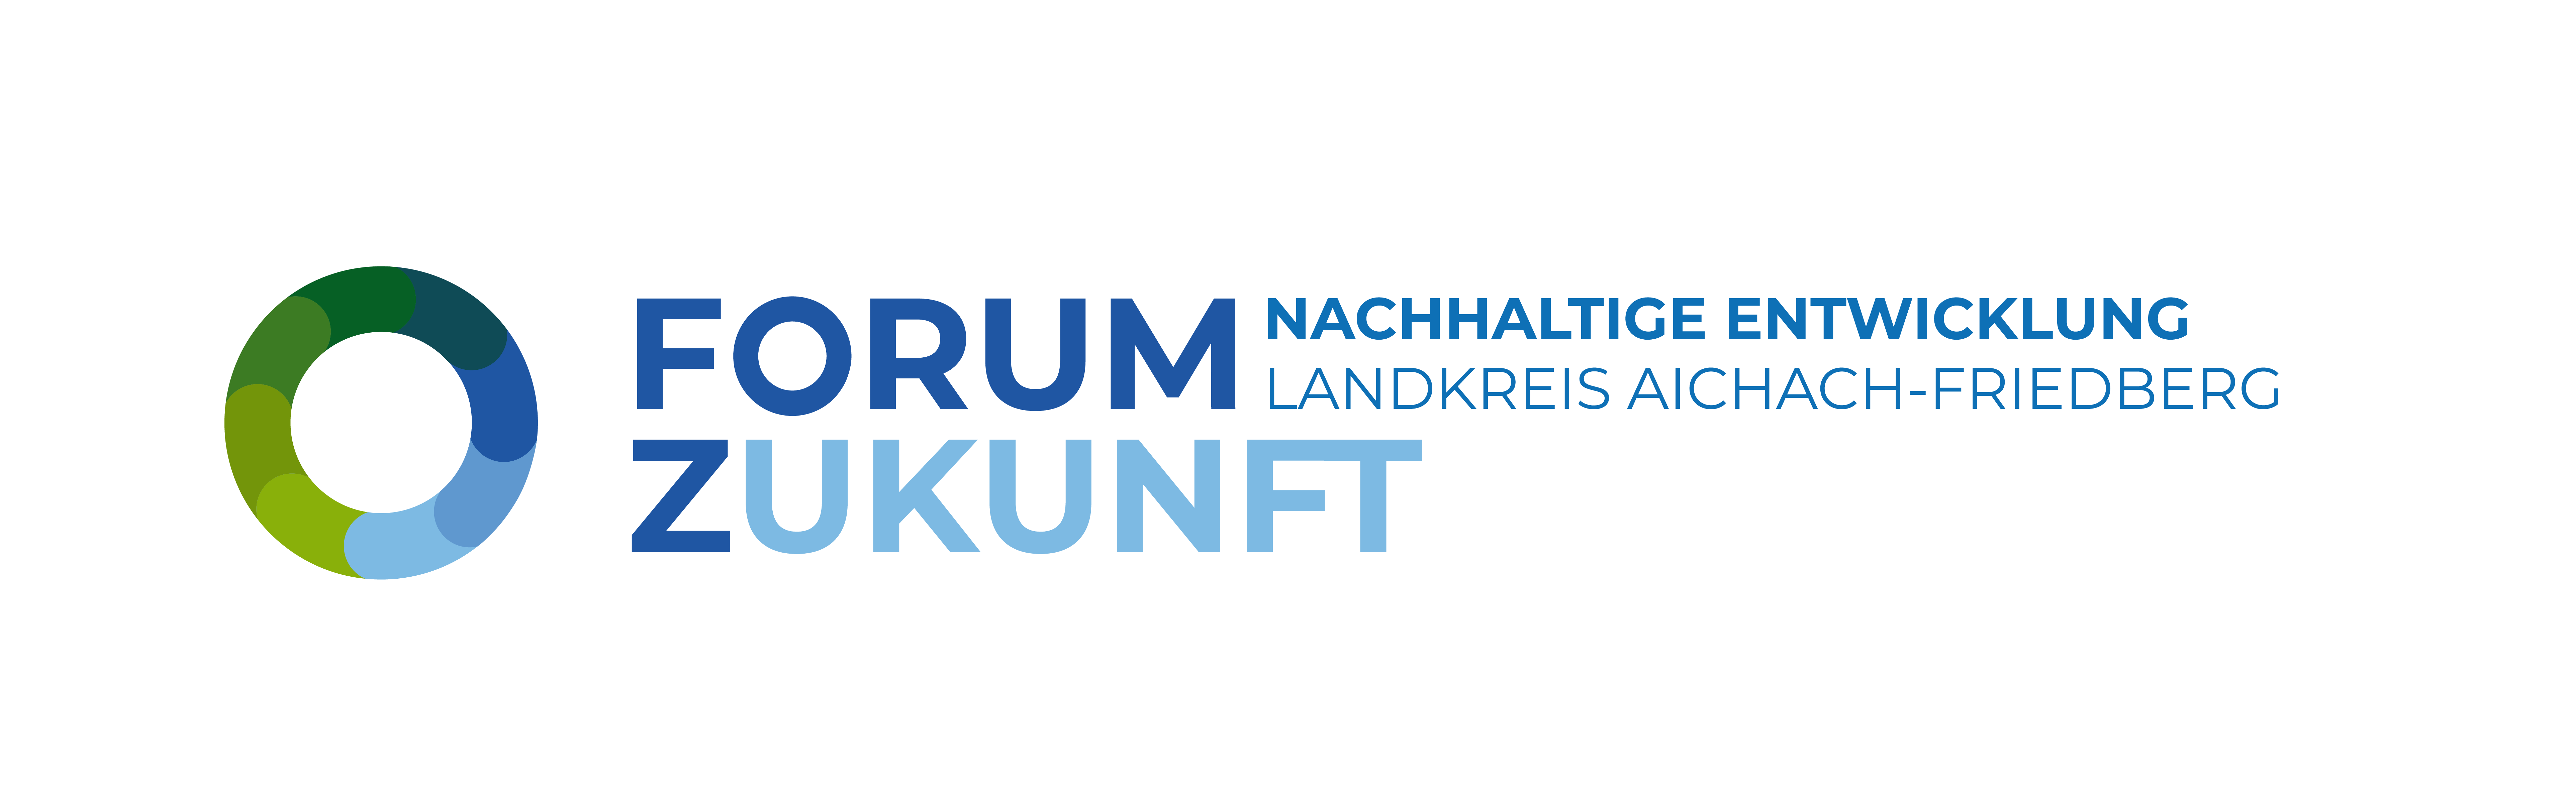 FORUM-z-Zukunft-Aichach-Friedberg-6